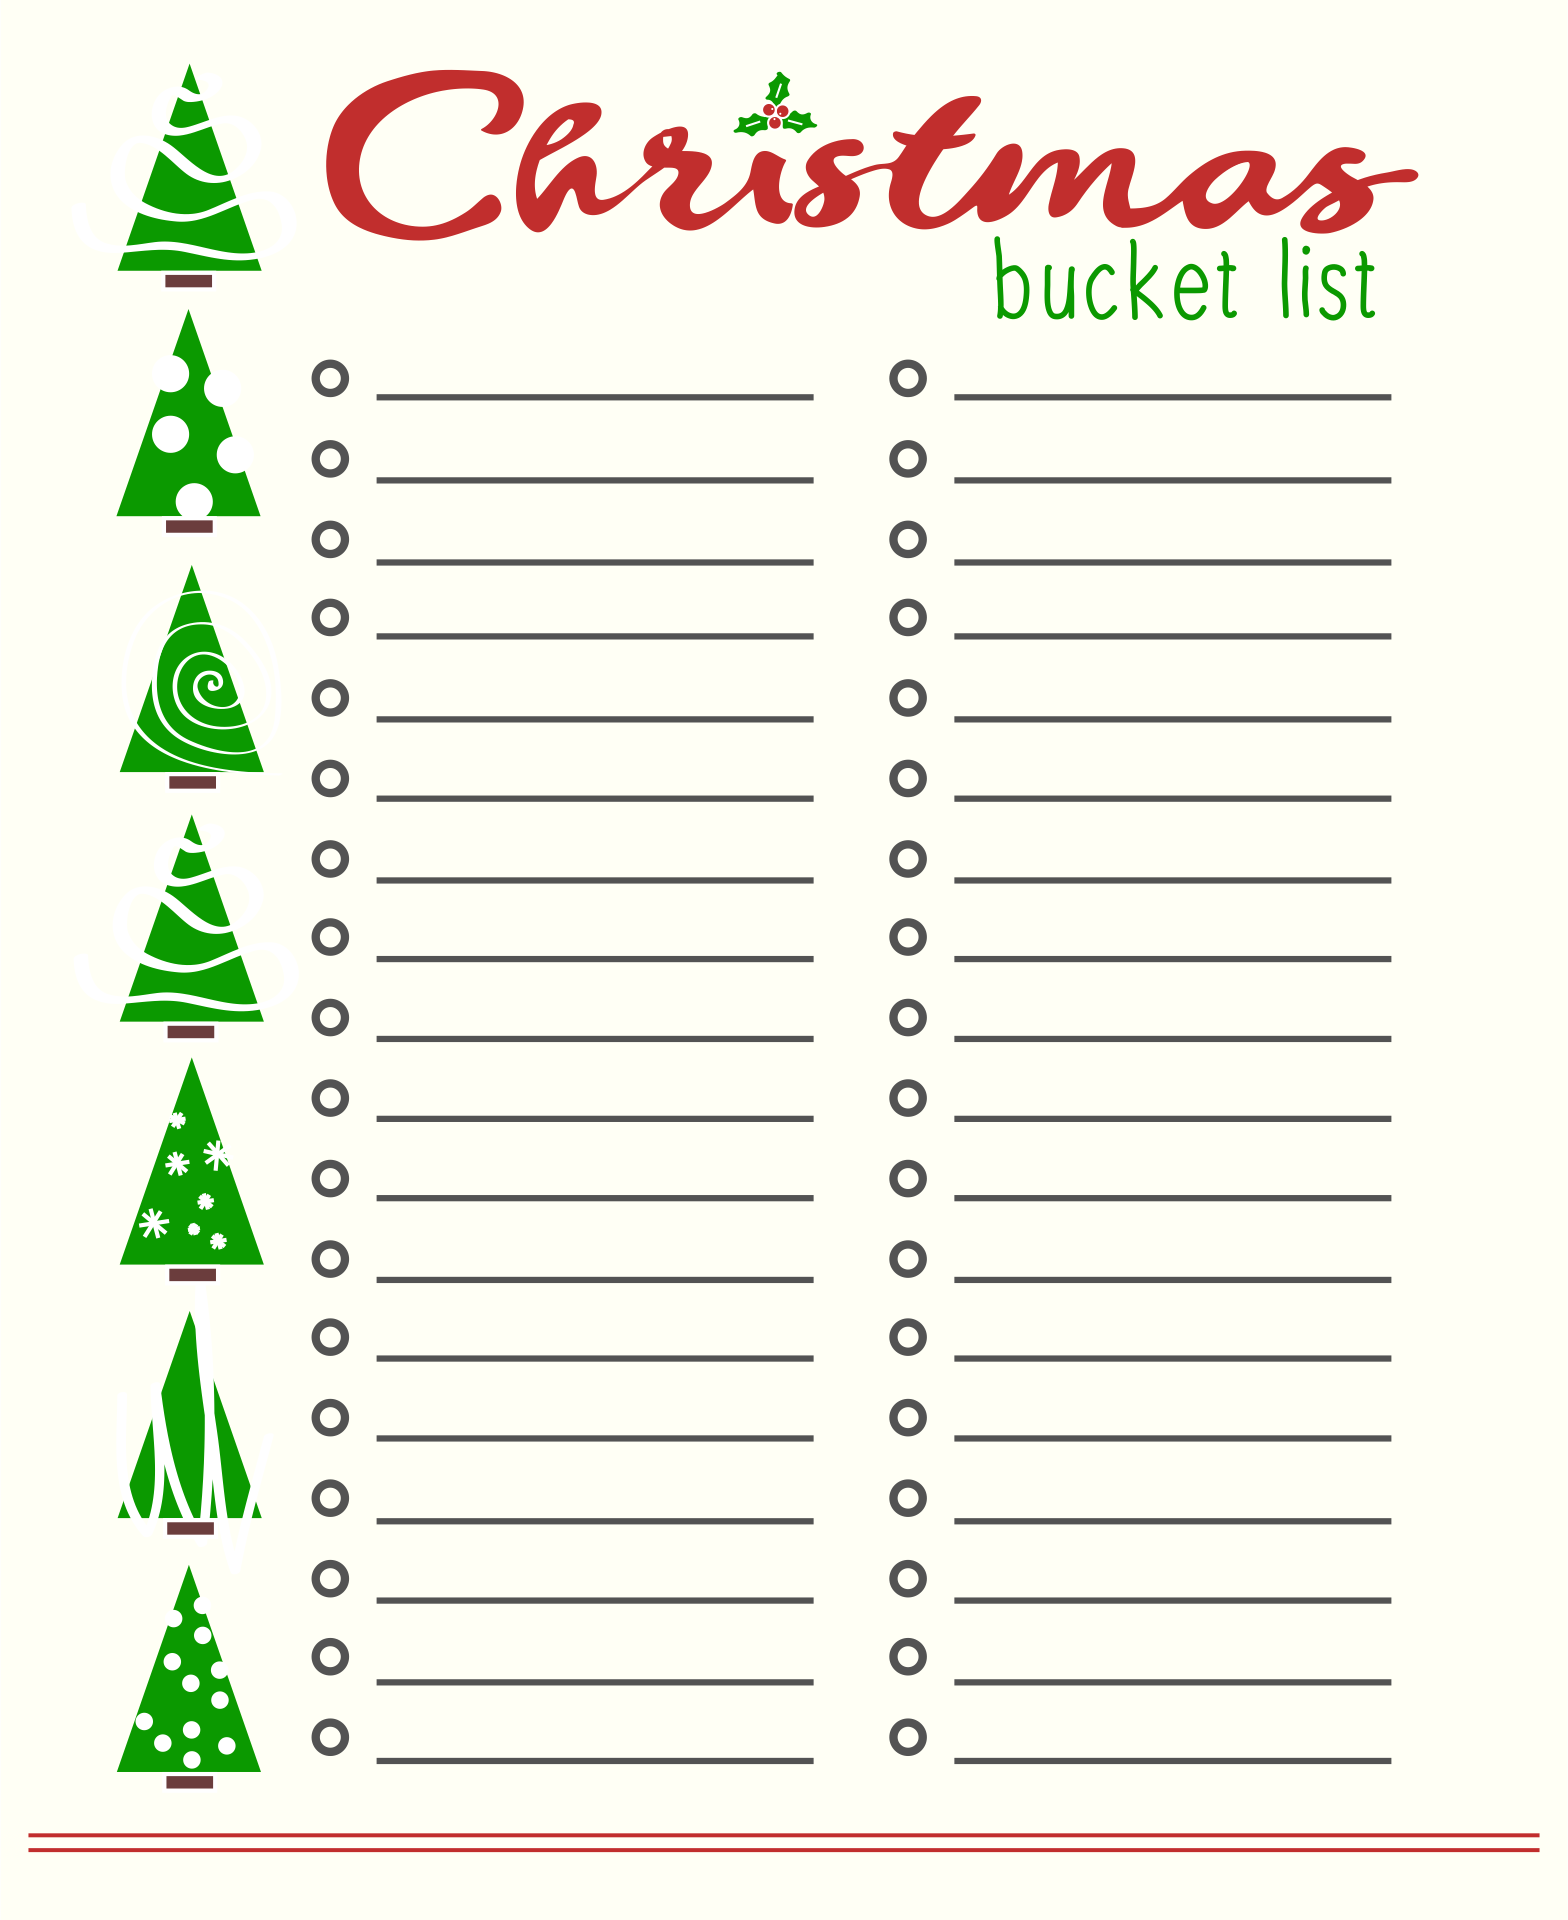 Bucket List Christmas Printables Blank